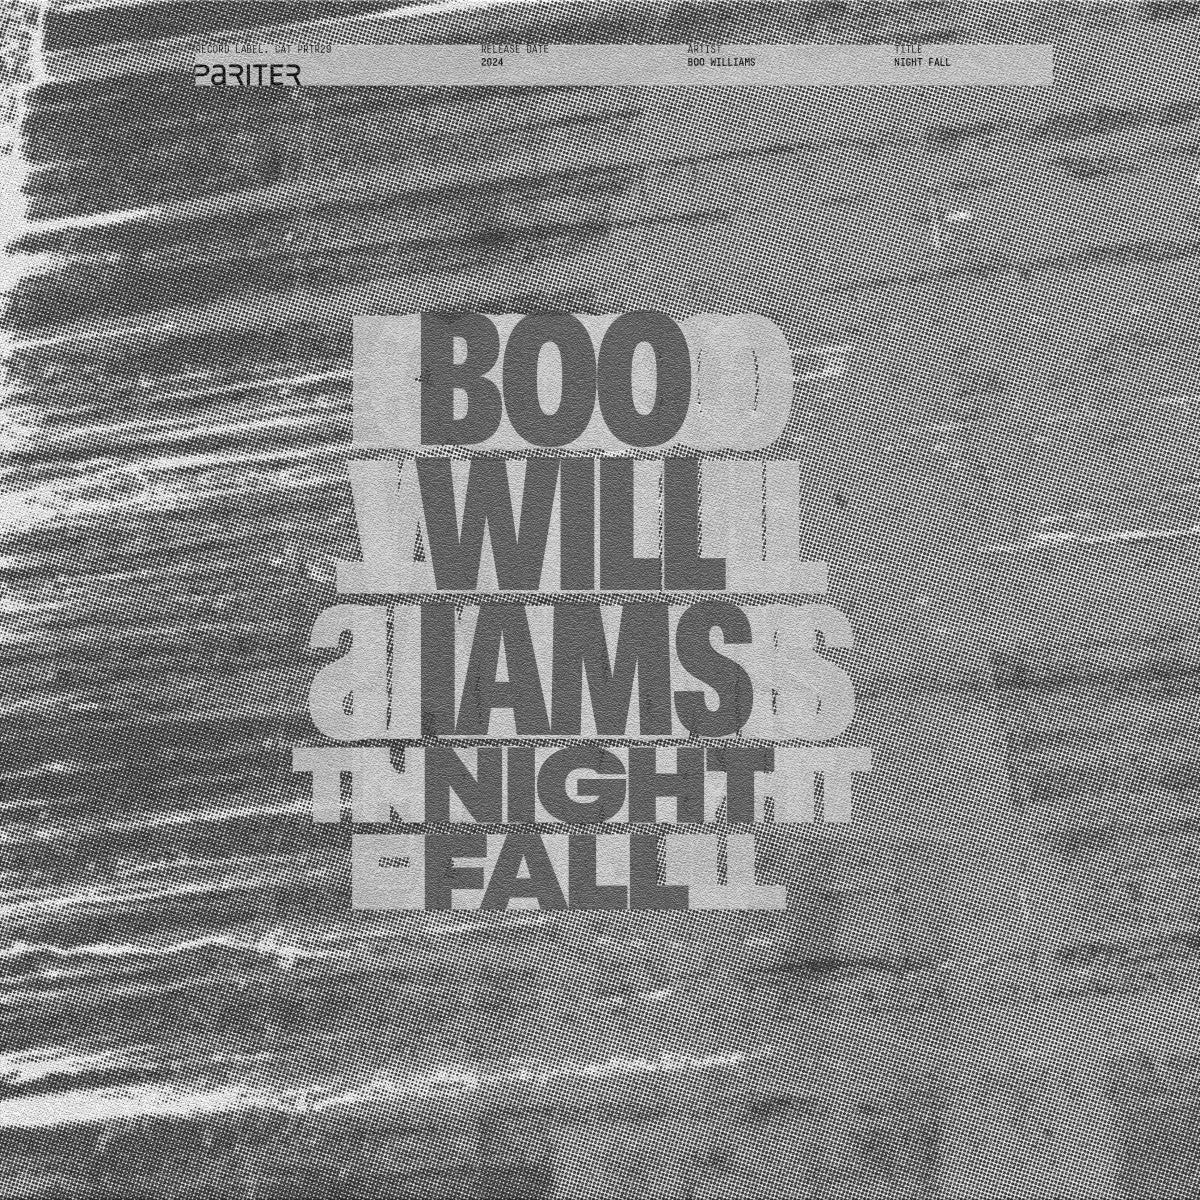 Boo Williams - Night Fall [Pariter]